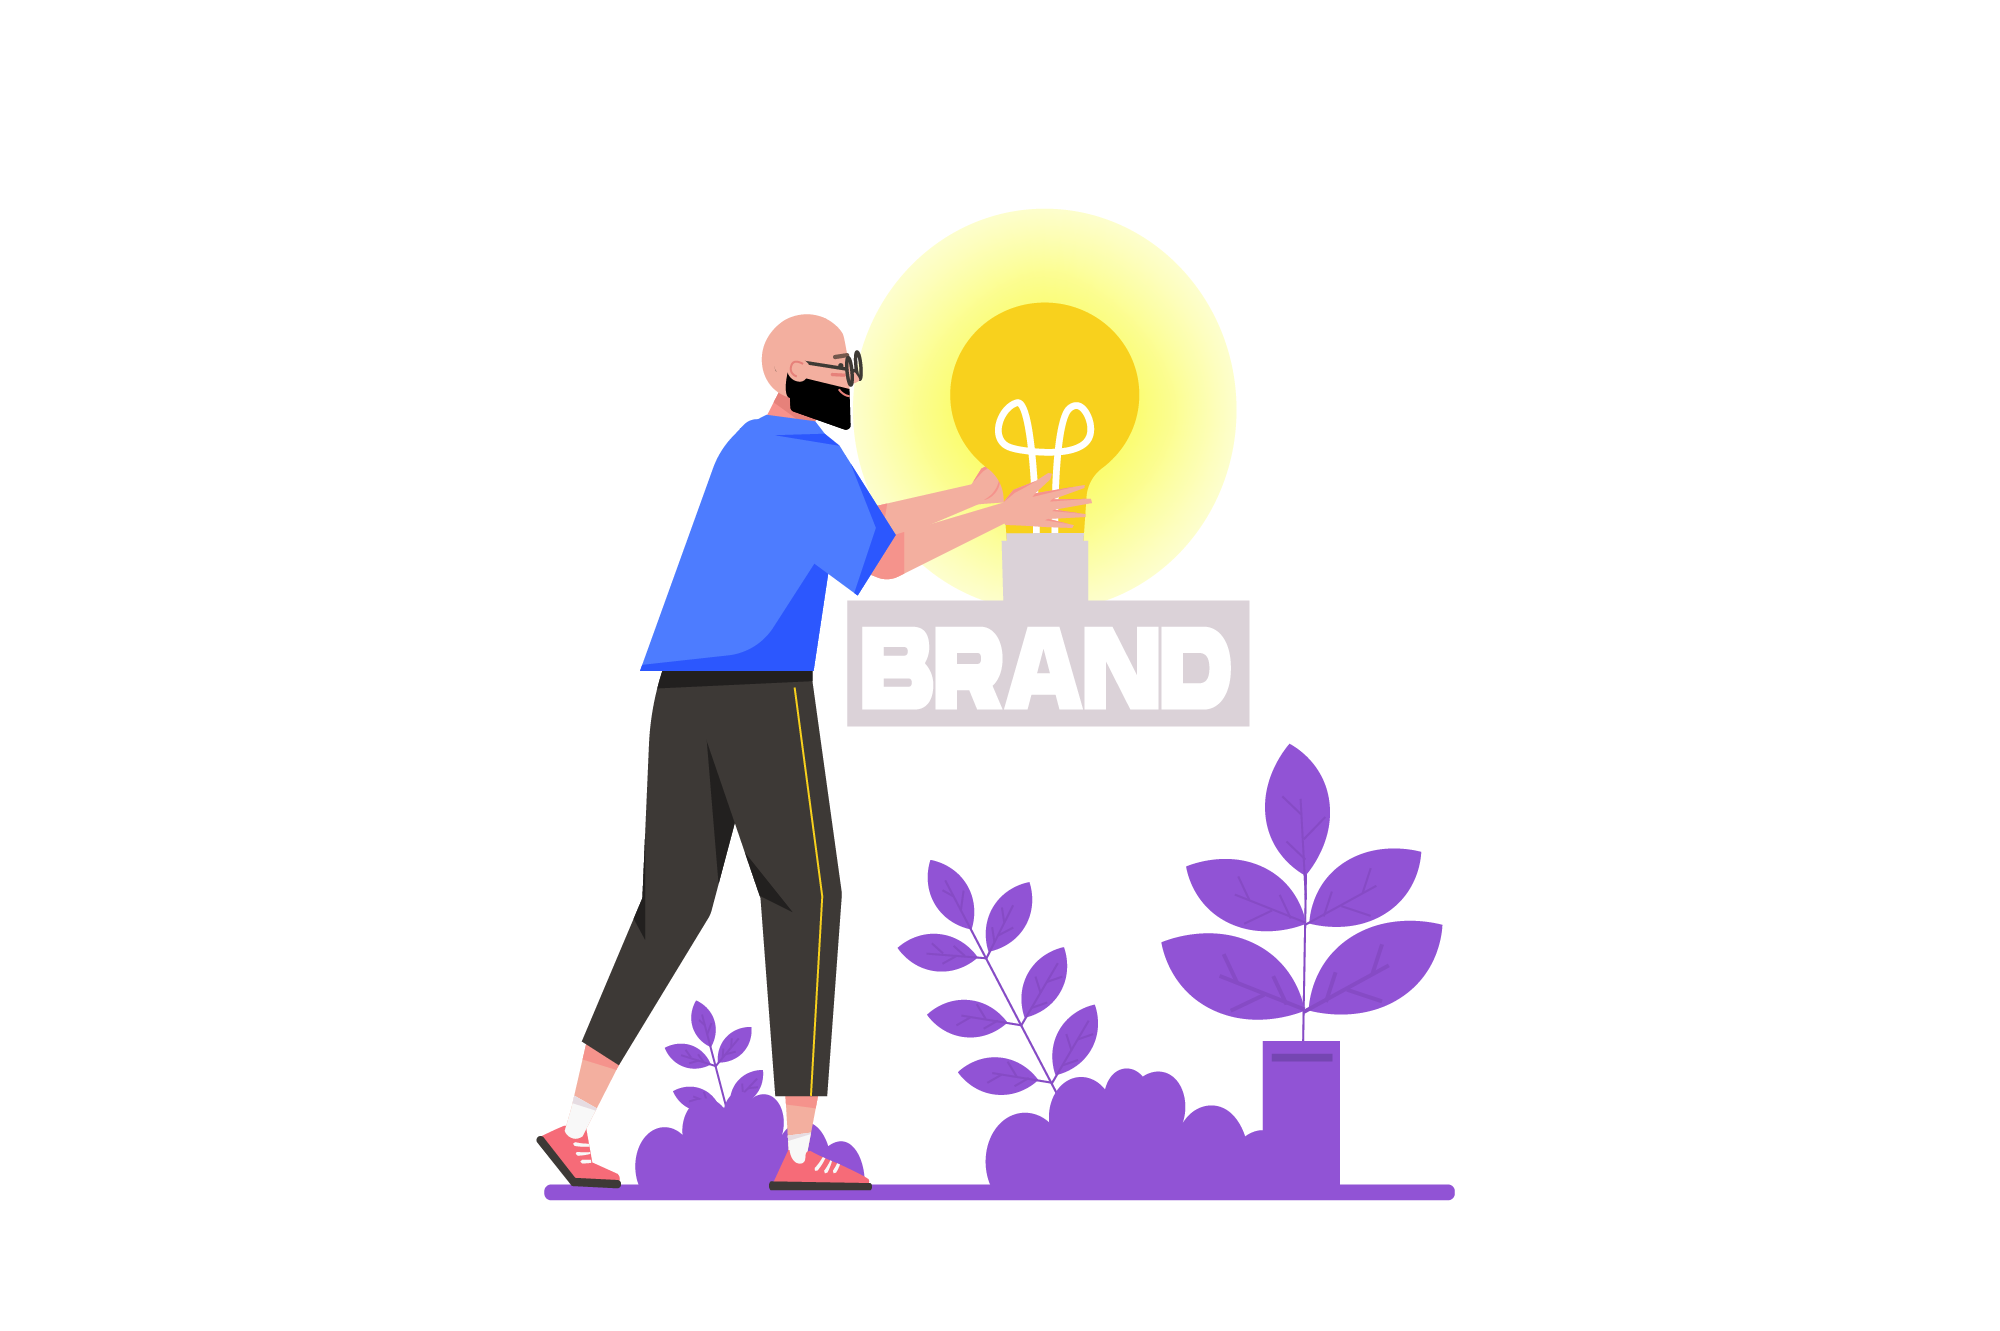 Creating my “Brand”